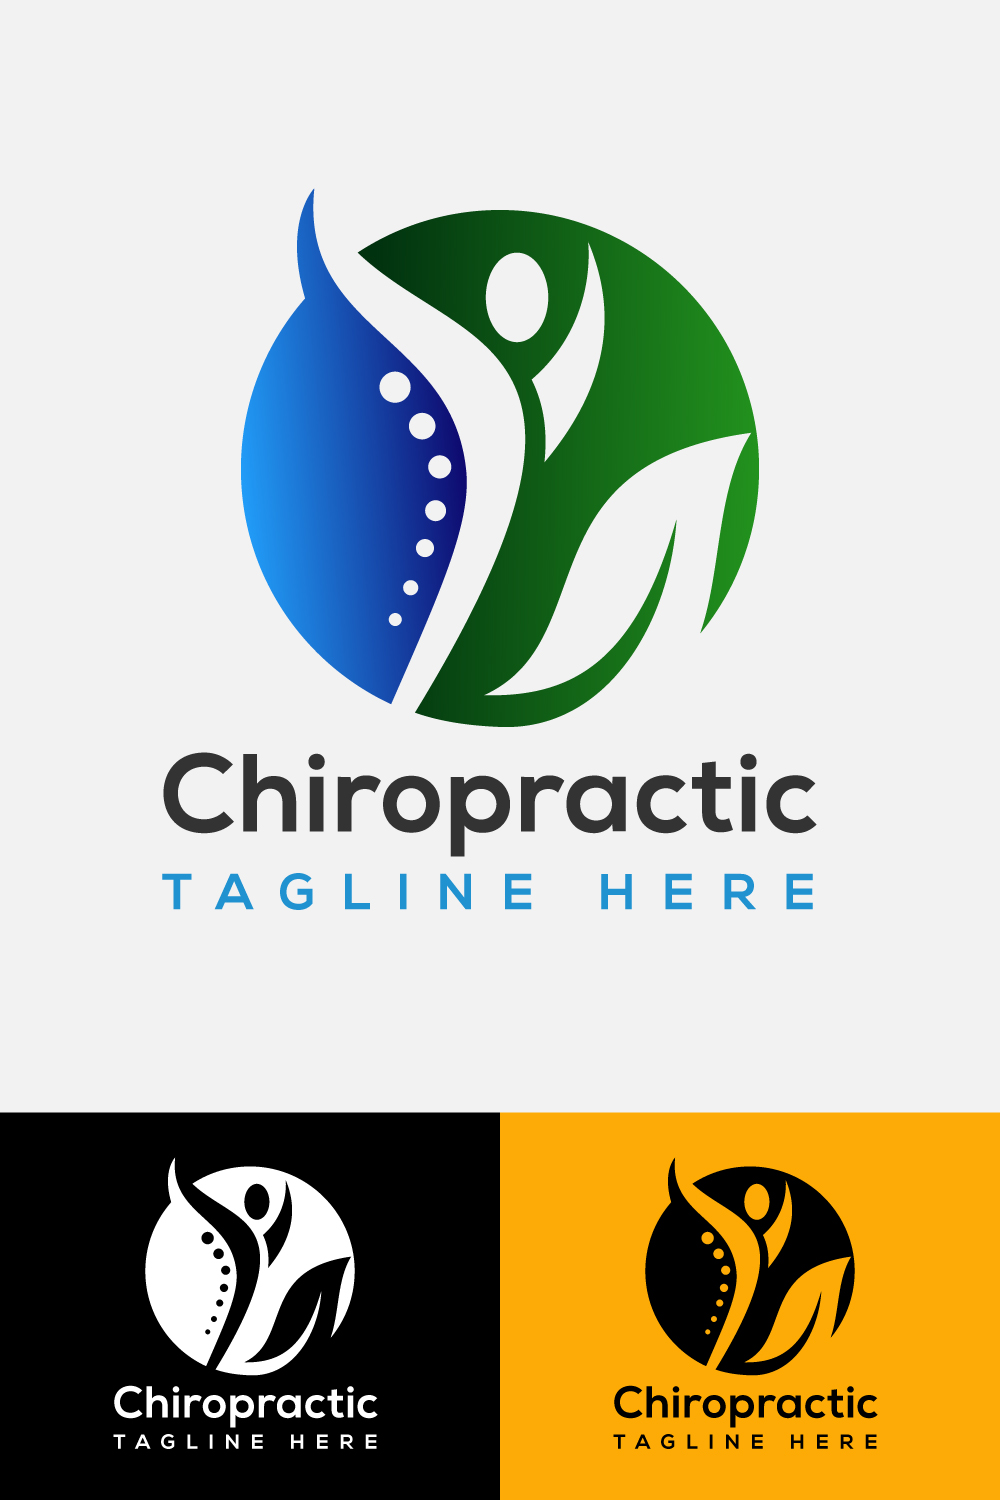 Medical Chiropractic Spine Logo Vector Design pinterest image.